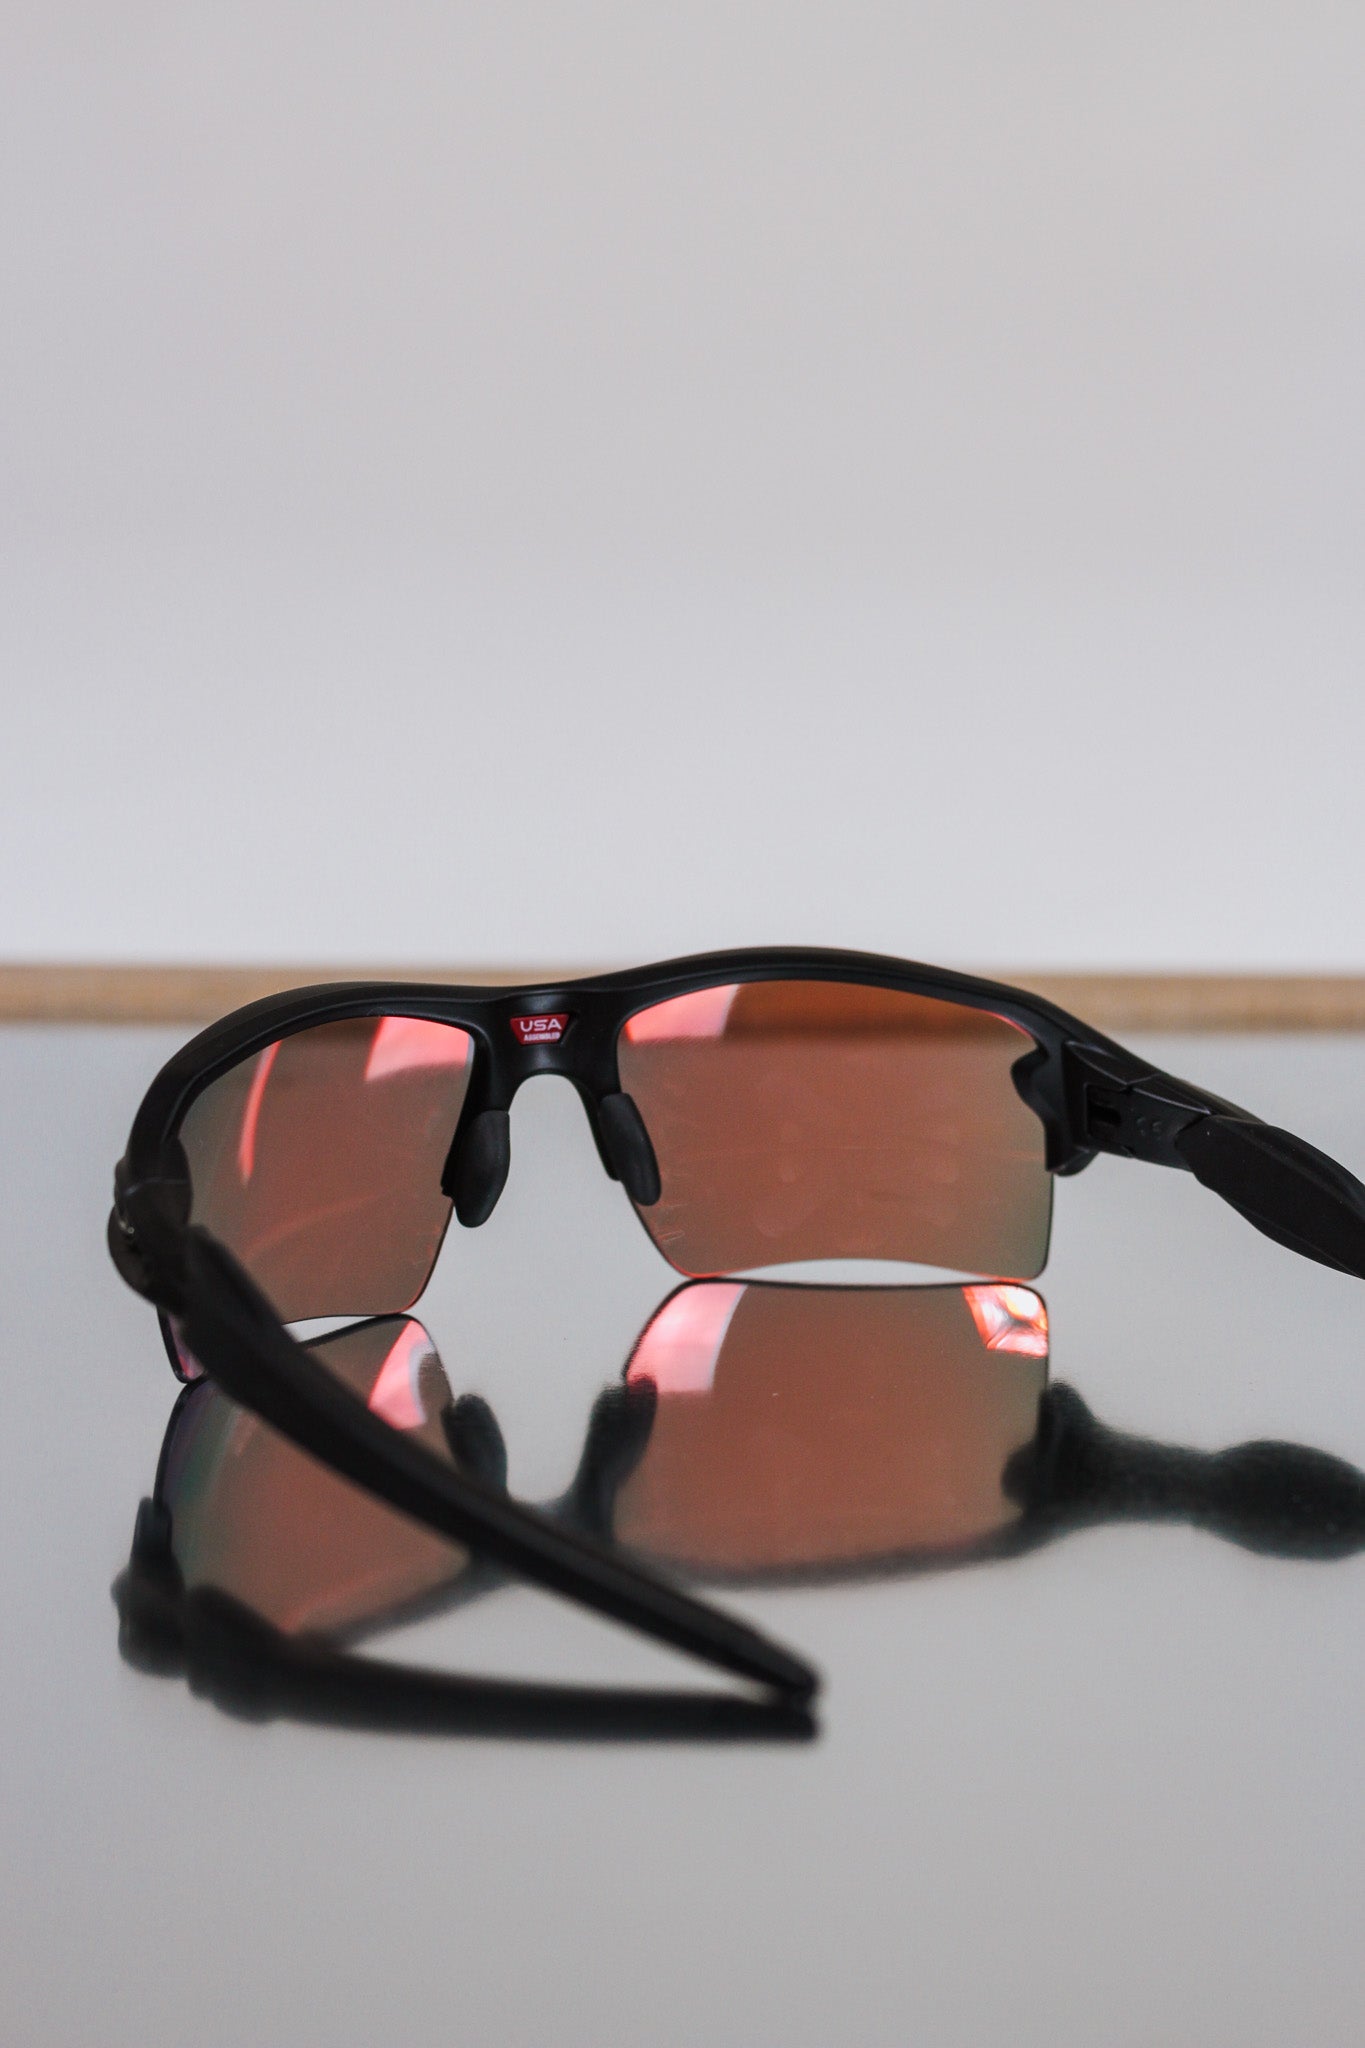 Flak® 2.0 XL Prizm Dark Golf Lenses, Matte Black Frame Sunglasses